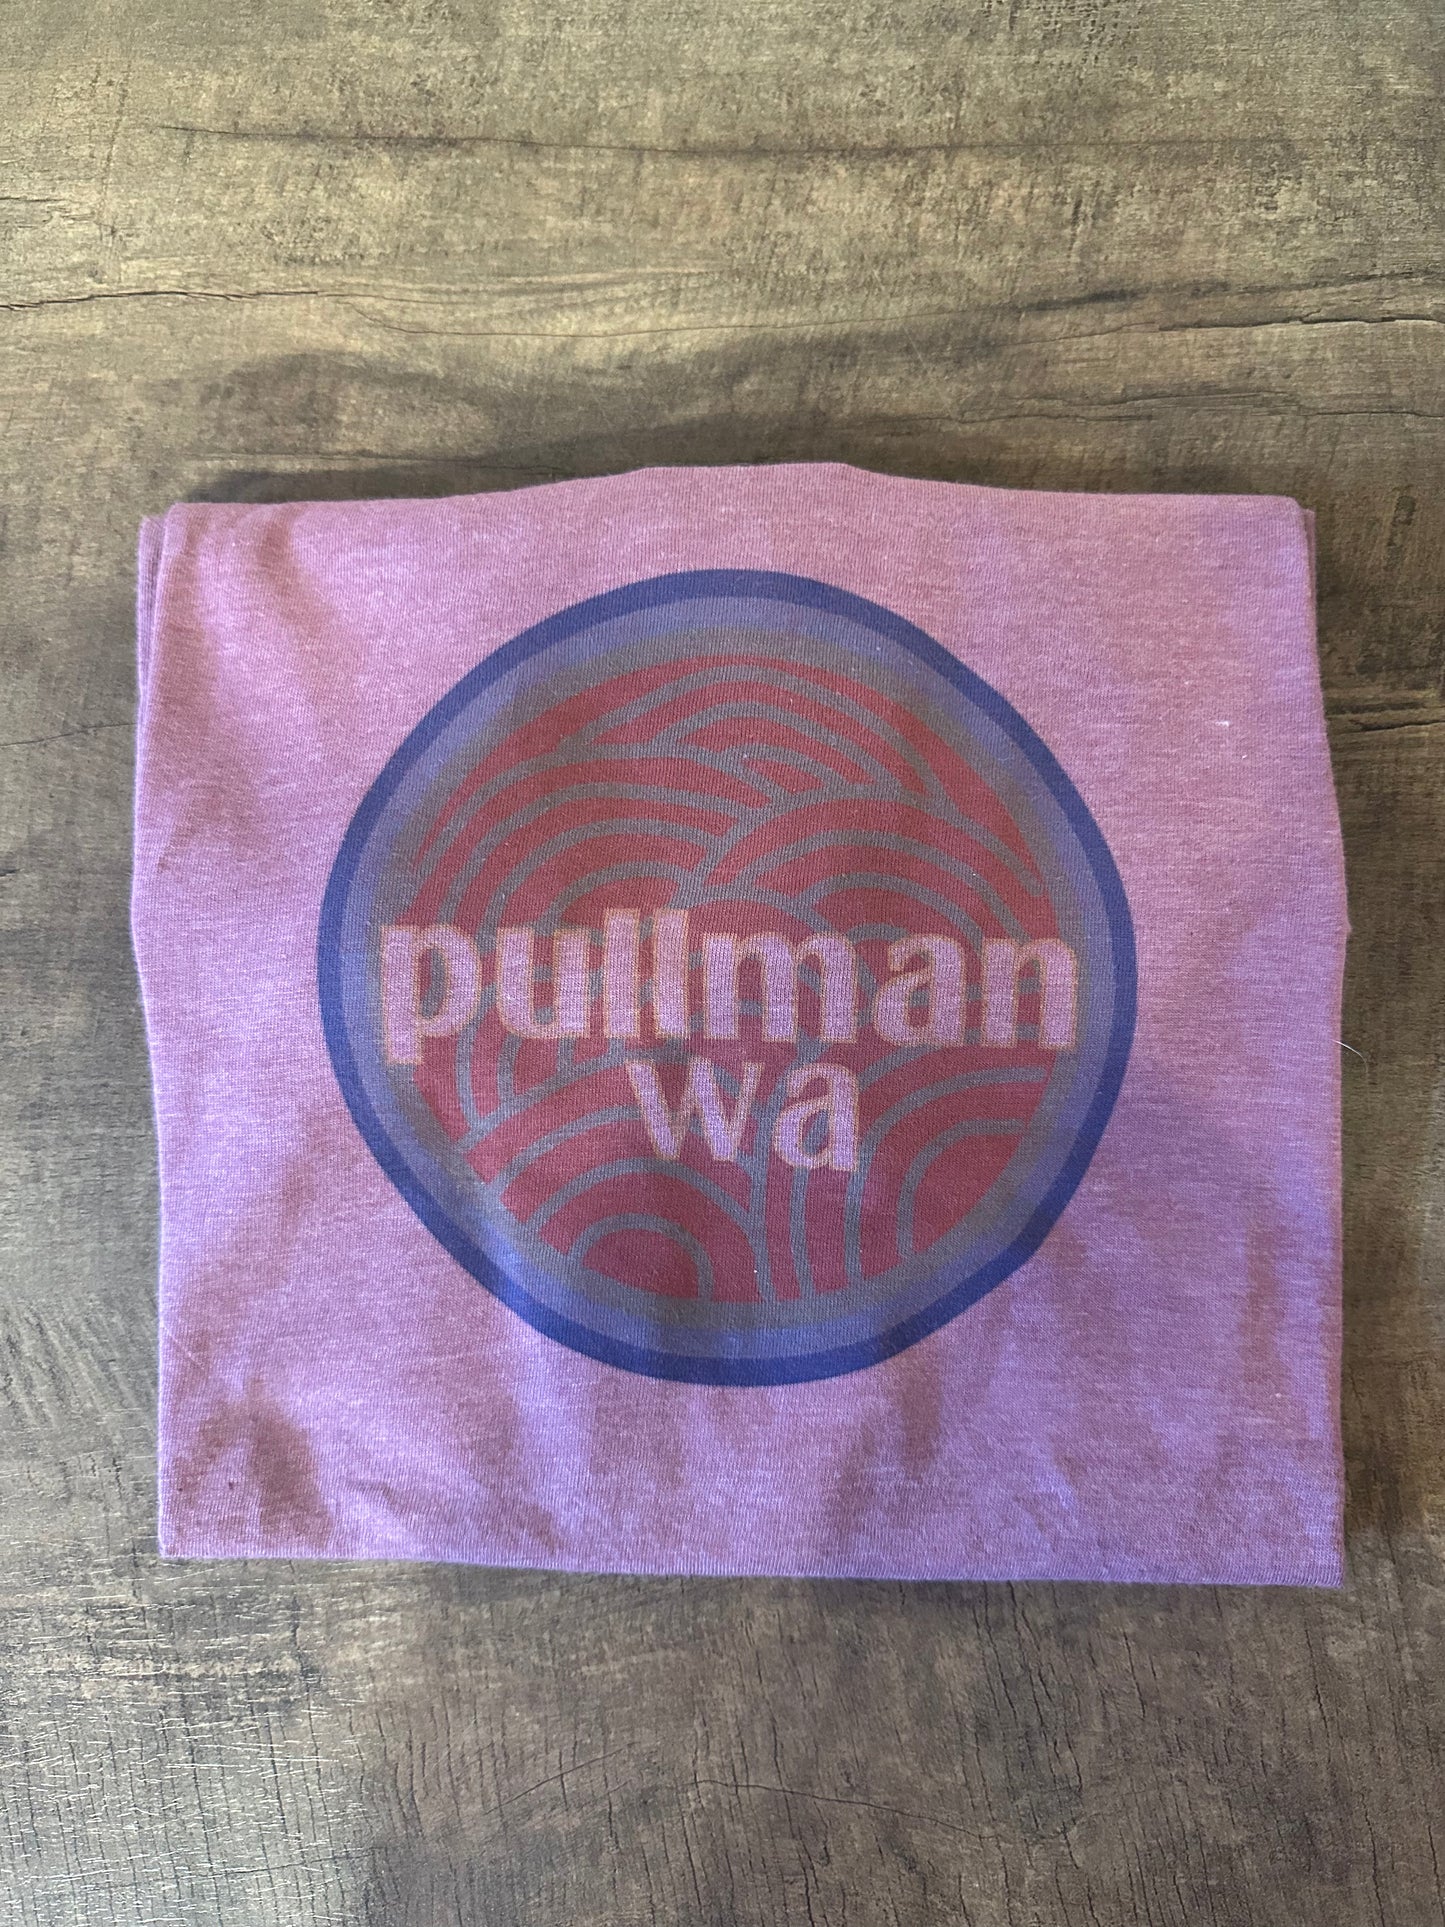 Retro Pullman T-Shirt